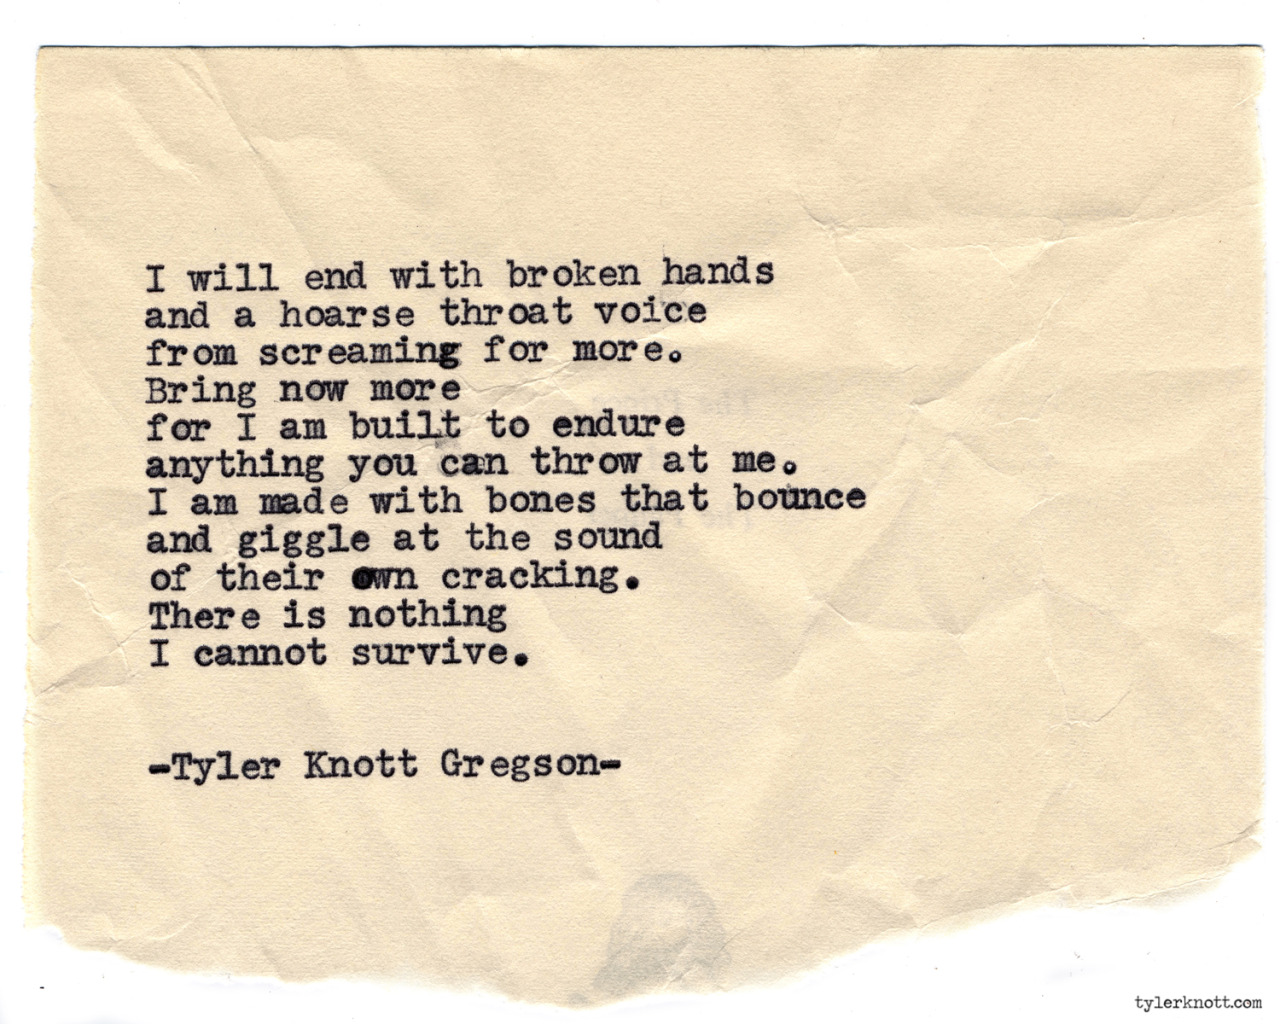 Tyler Knott Gregson — Typewriter Series #792 by Tyler Knott Gregson